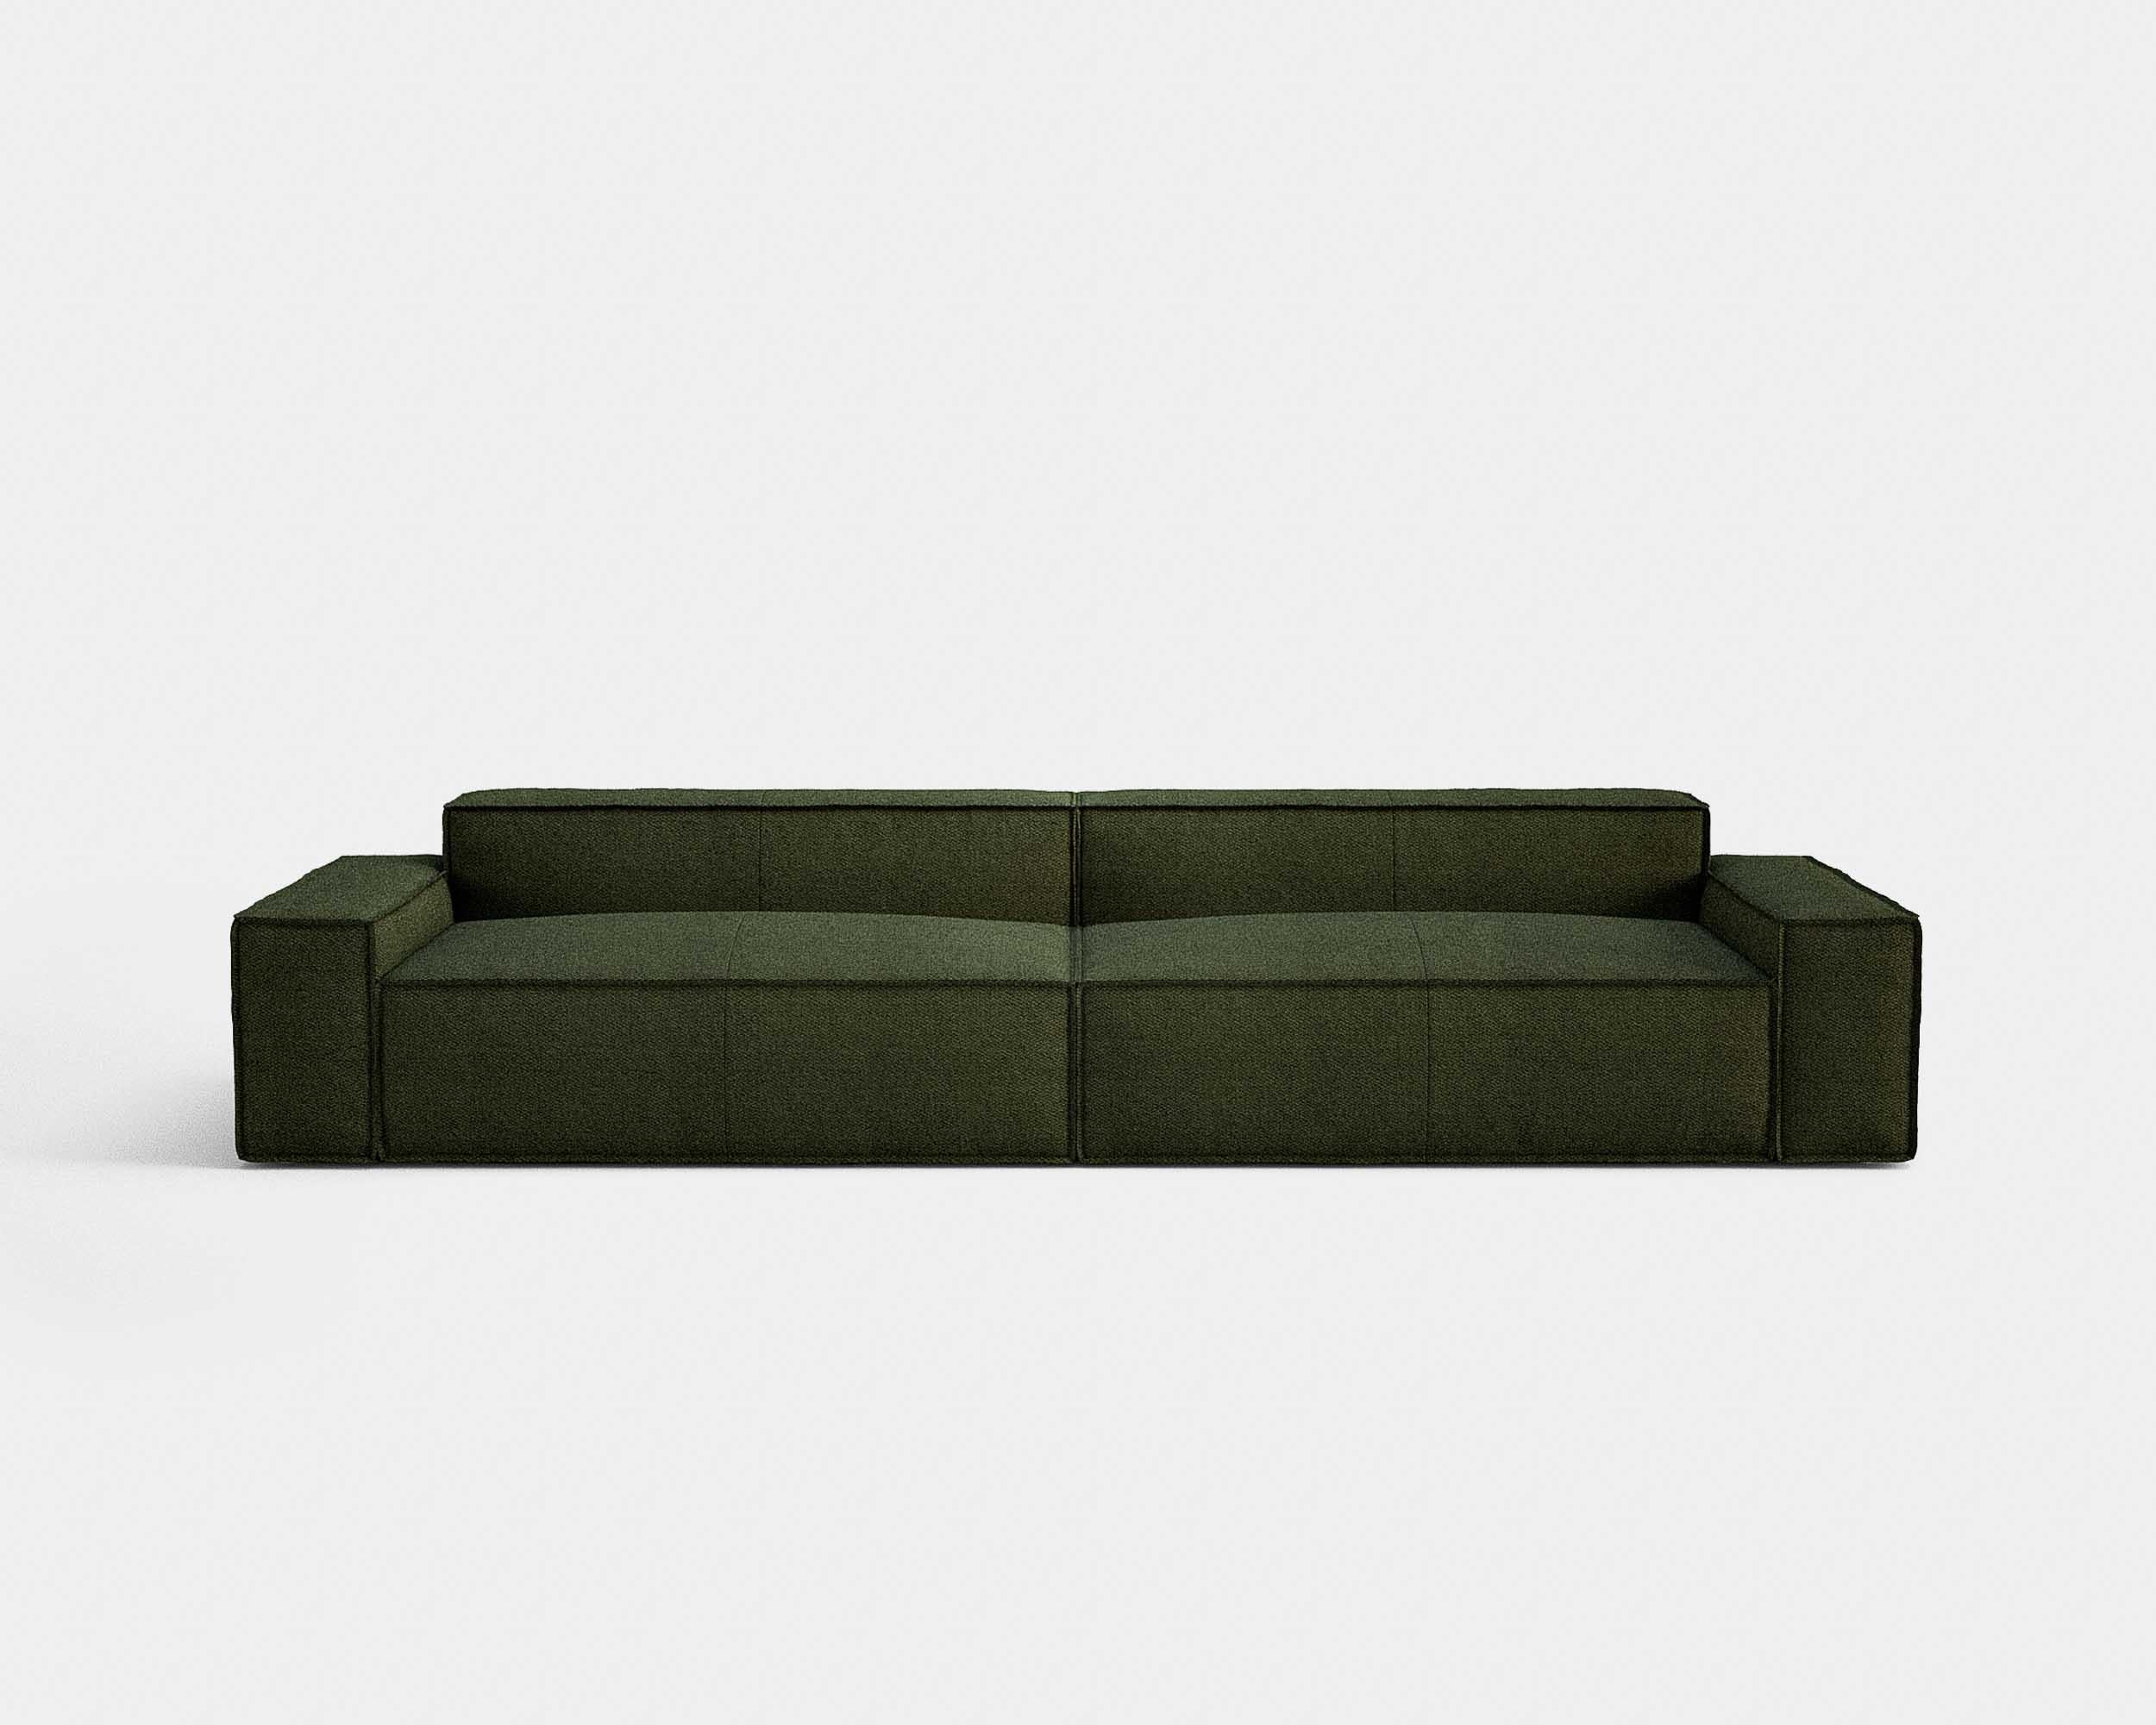 Organic Modern Contemporary Sofa 'Davis' by Amura Lab, Model 021.022, Brera 850, Green 11 For Sale